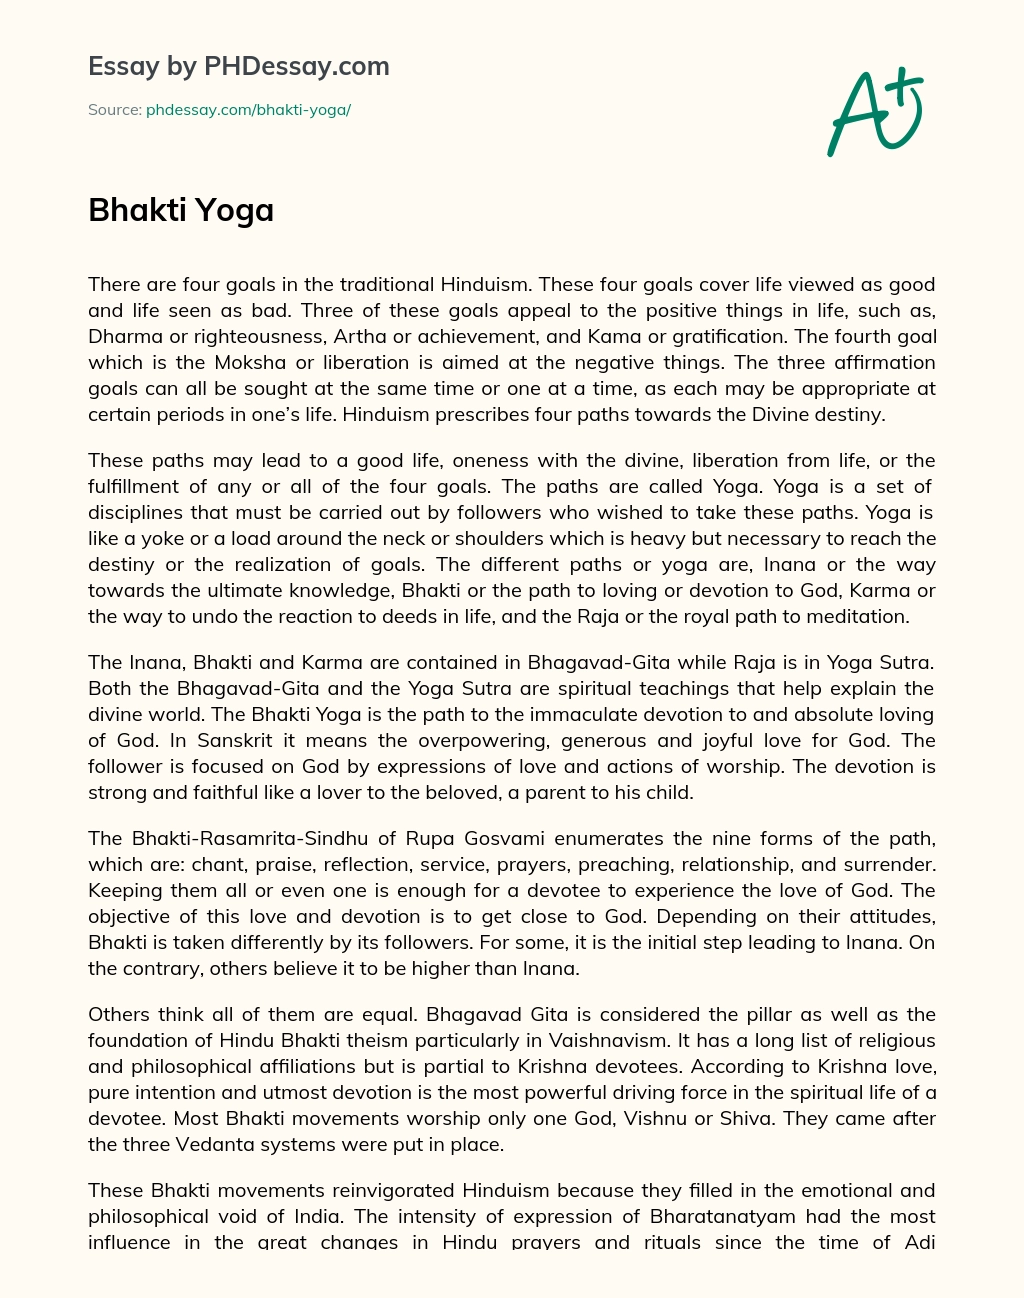 Bhakti Yoga essay